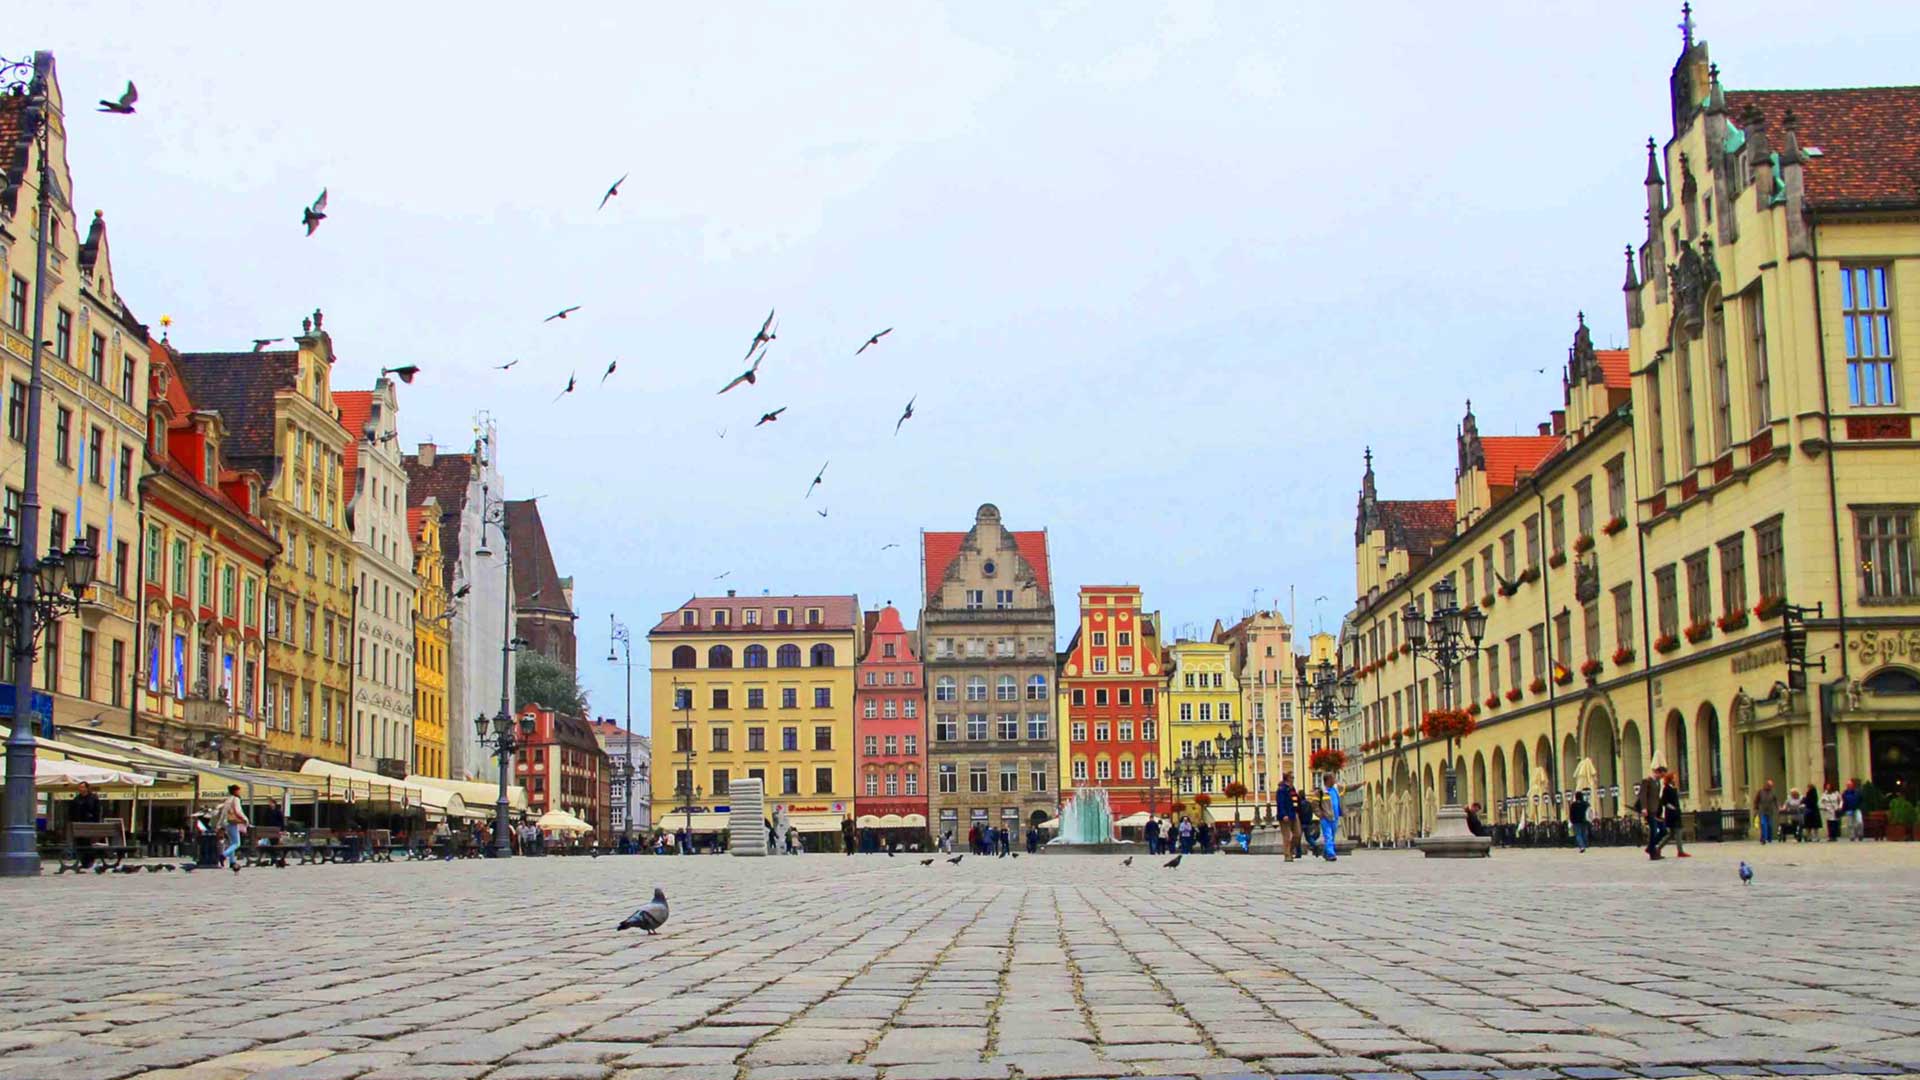 Main square in Wrocław, Poland